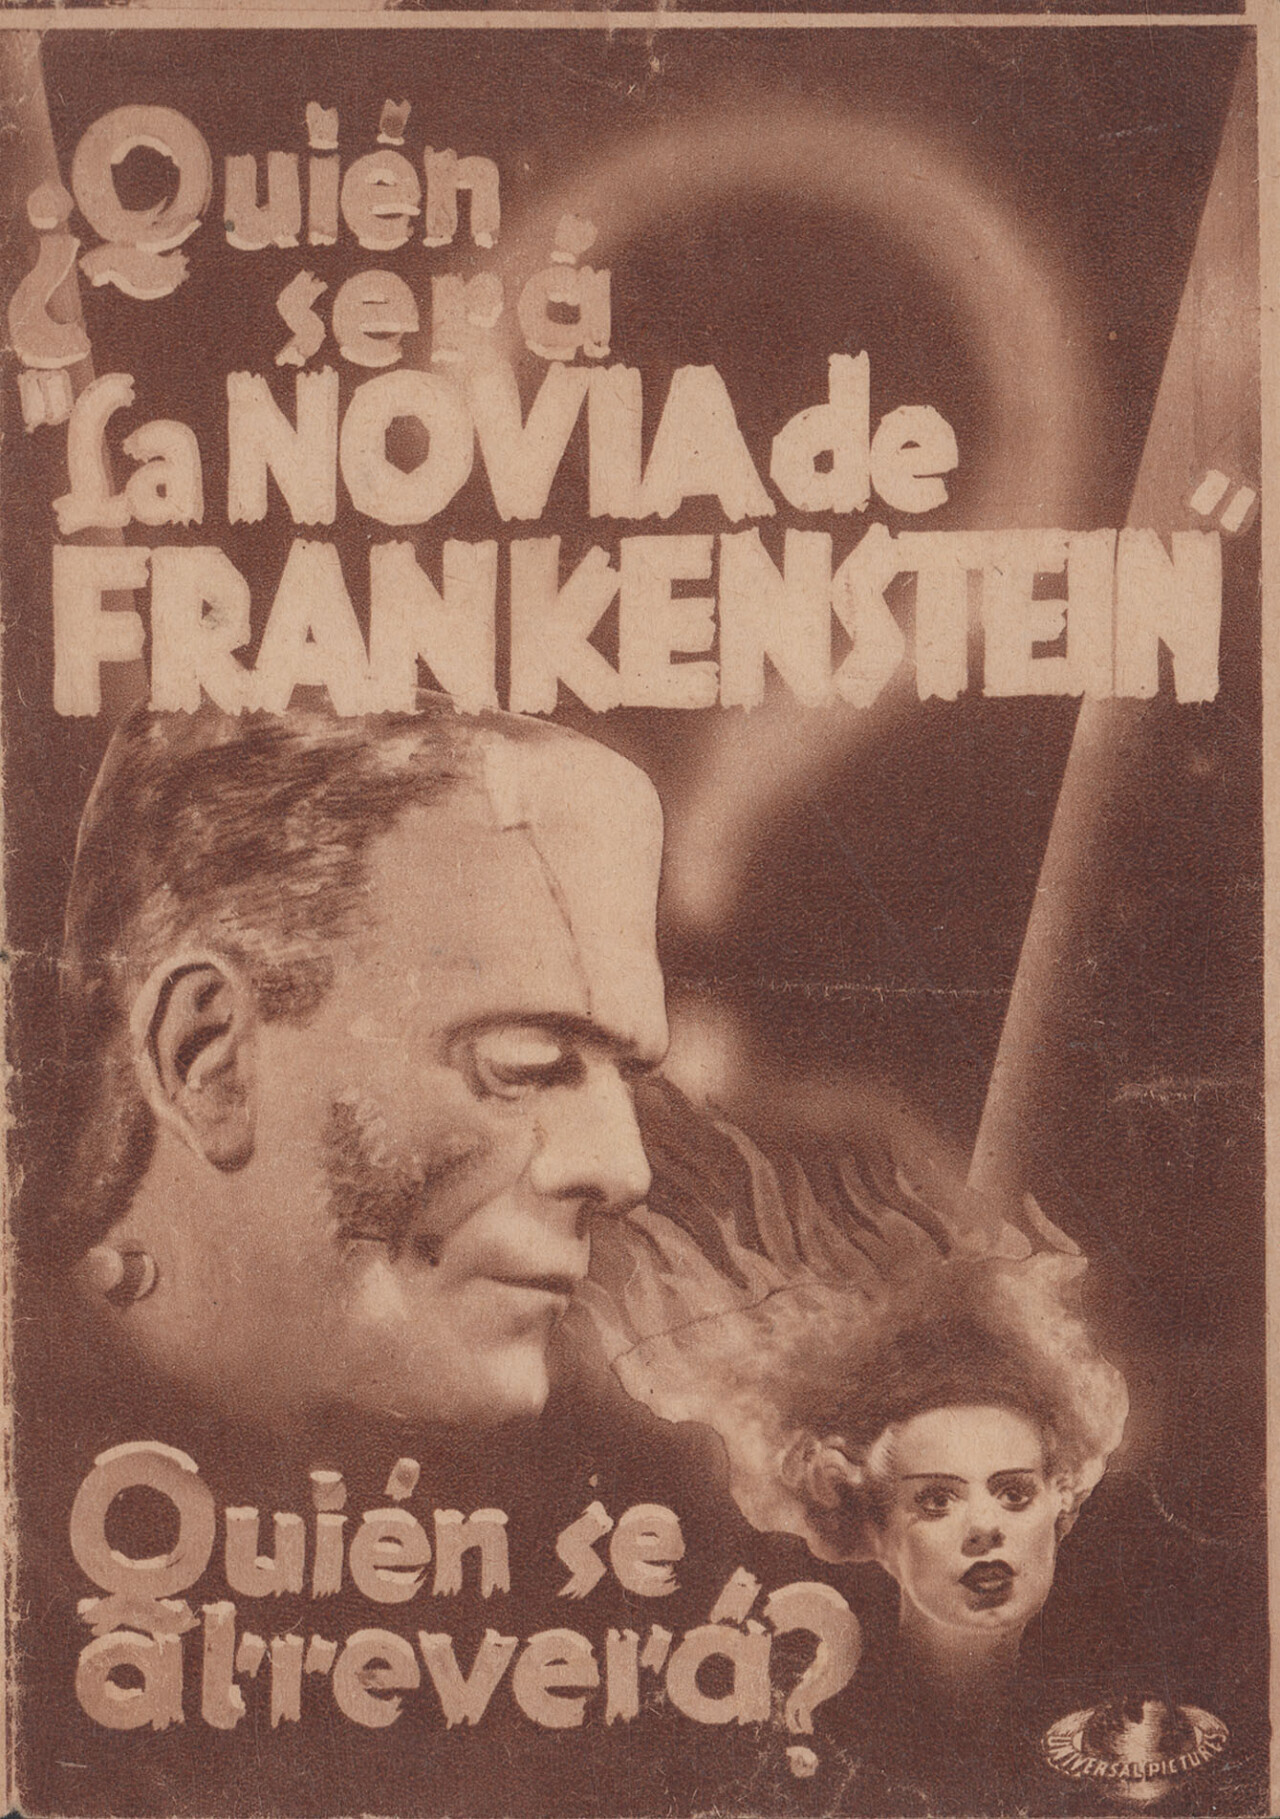 Невеста Франкенштейна (The Bride of Frankenstein, 1935), режиссёр Джеймс Уэйл, испанский постер к фильму (монстры, 1935 год)